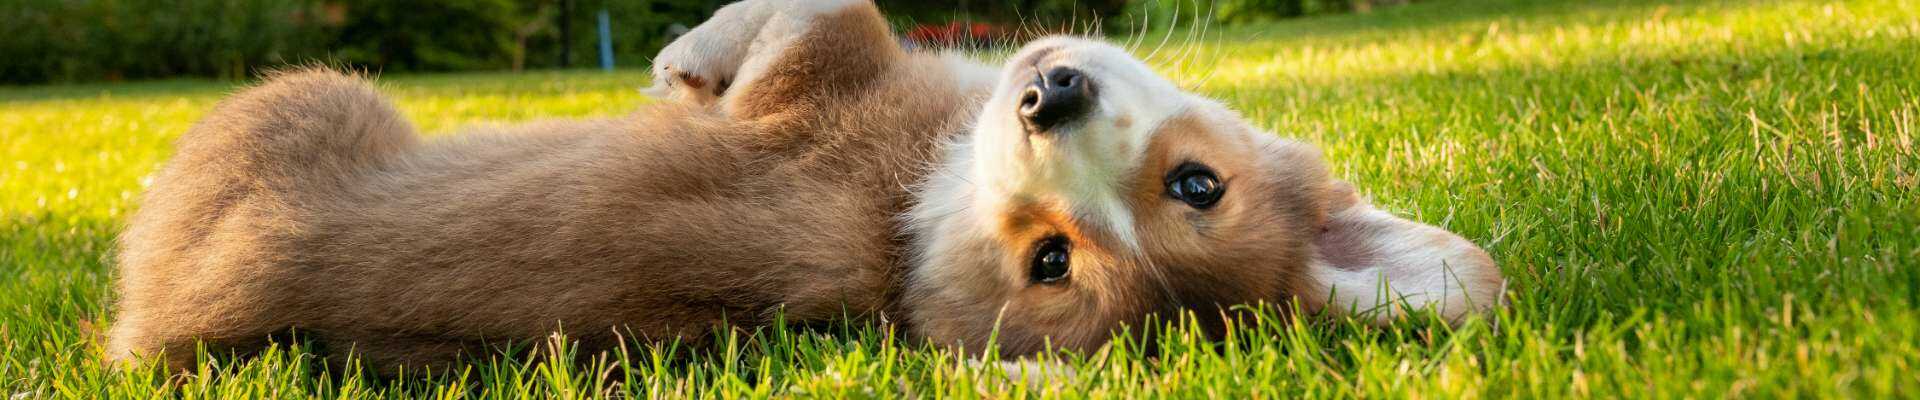 corgi puppy lying on back in grass